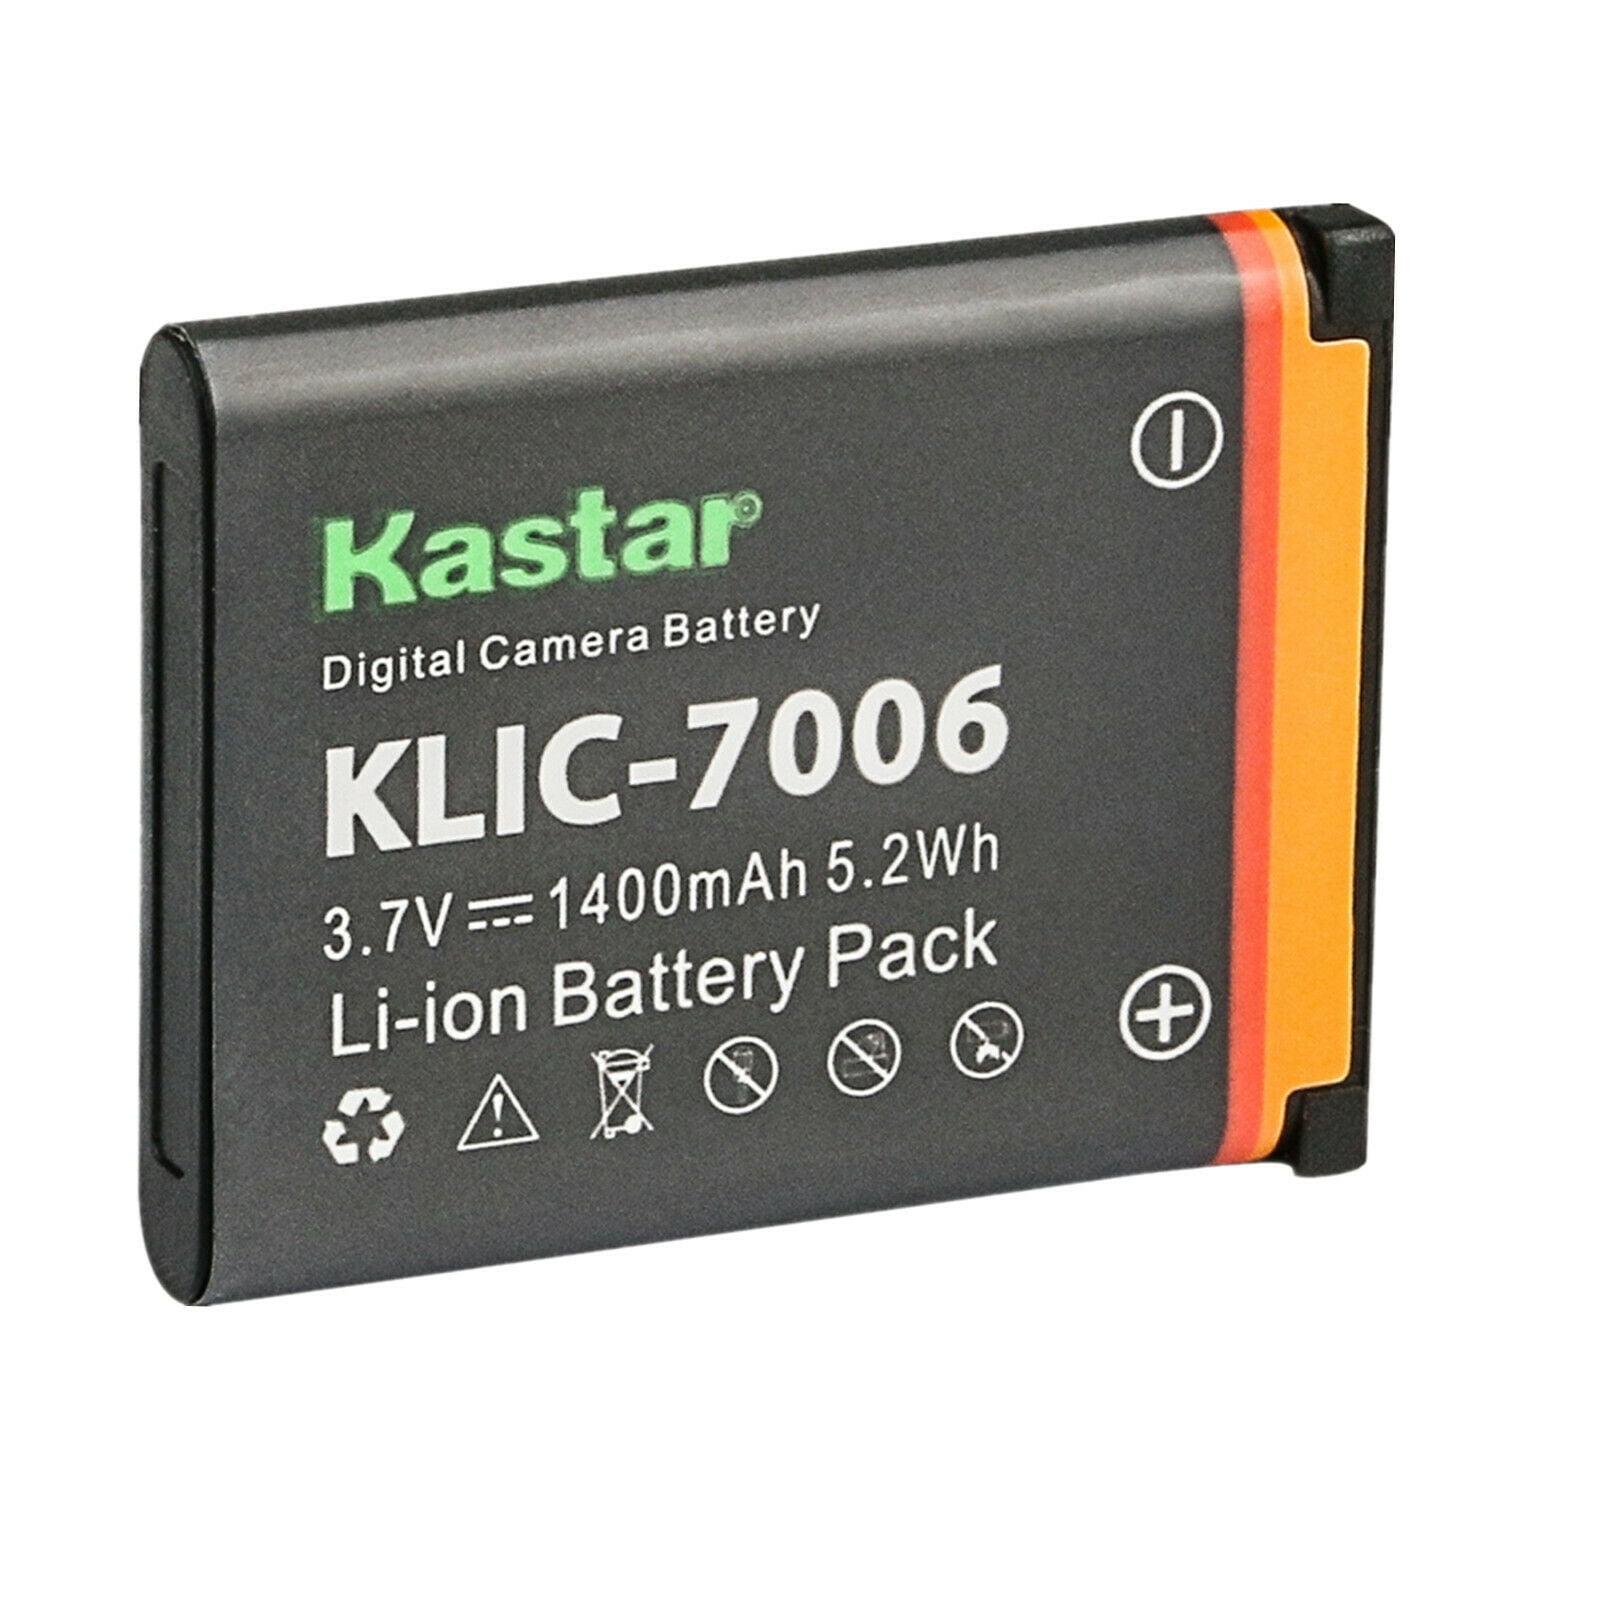  Kastar 1-Pack Battery Replacement for Kodak LB-060 LB060 Battery,  Kodak PixPro AZ522, PixPro AZ525, PixPro AZ526, PixPro AZ527, PixPro AZ528  Camera, Minolta MN53Z 16MP FHD Wi-Fi Bridge Camera : Electronics